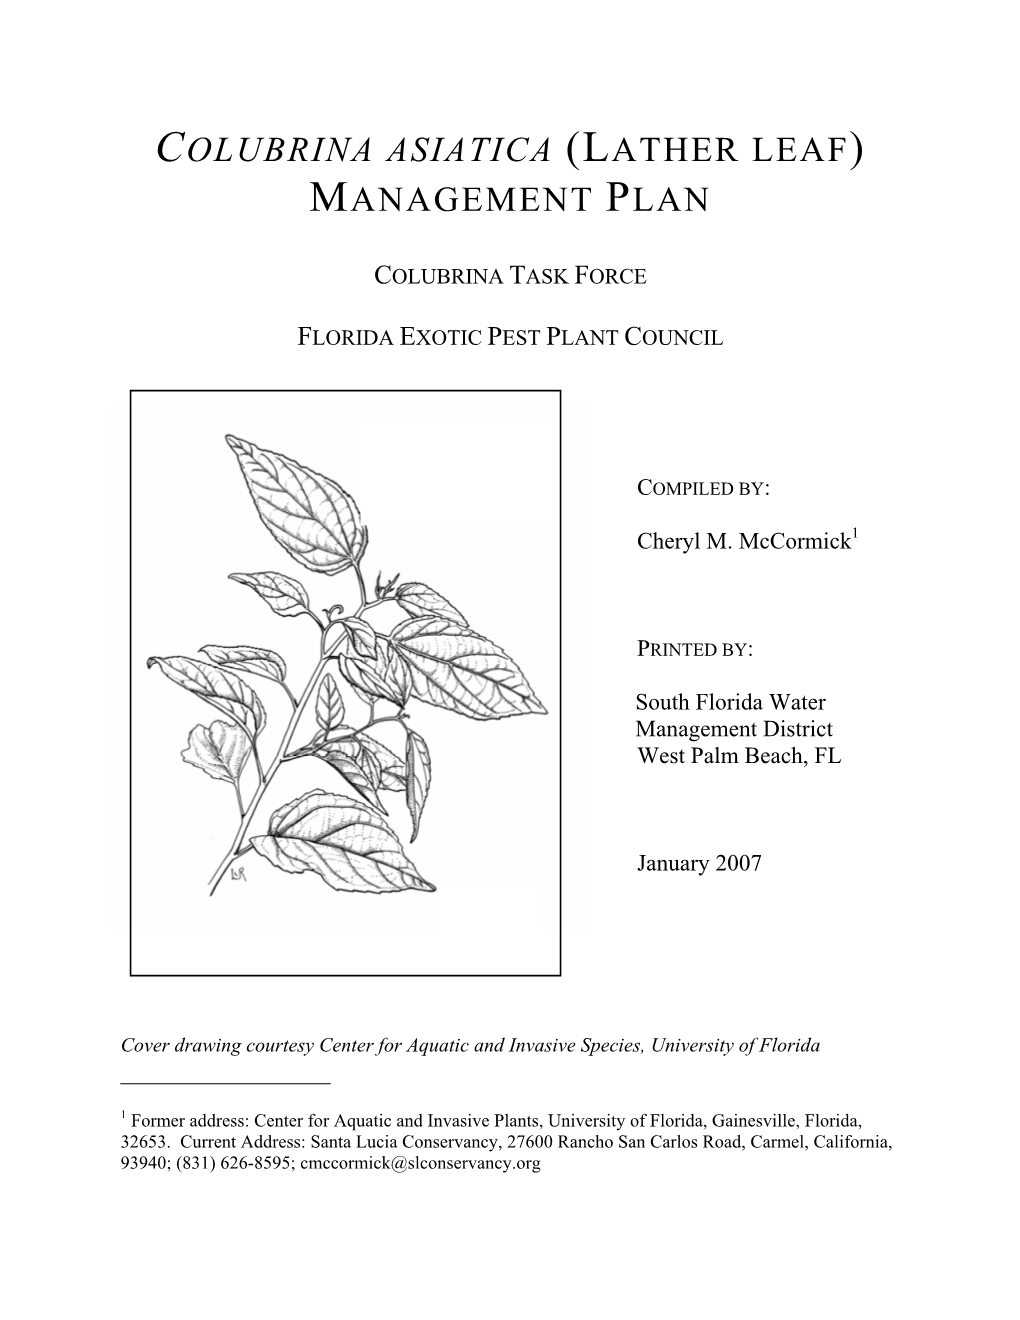 Colubrina Asiatica (Lather Leaf) Management Plan